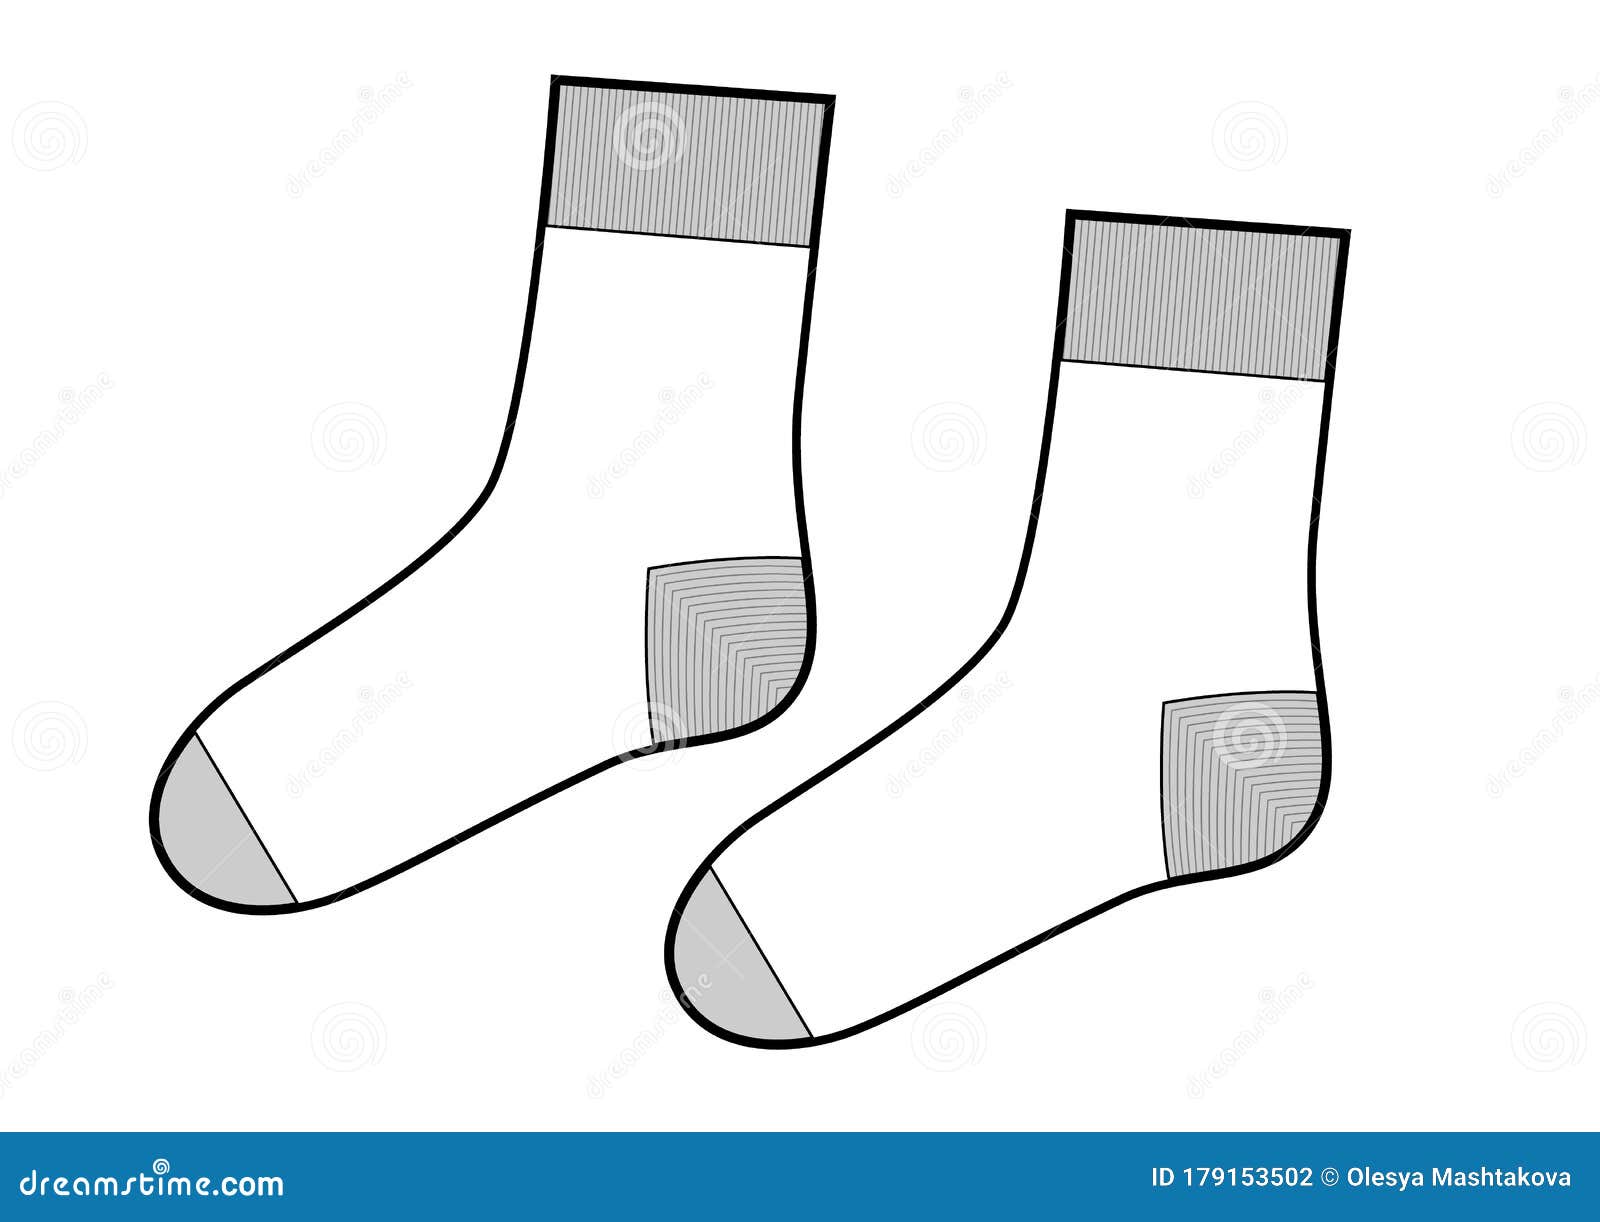 Socks Design Template